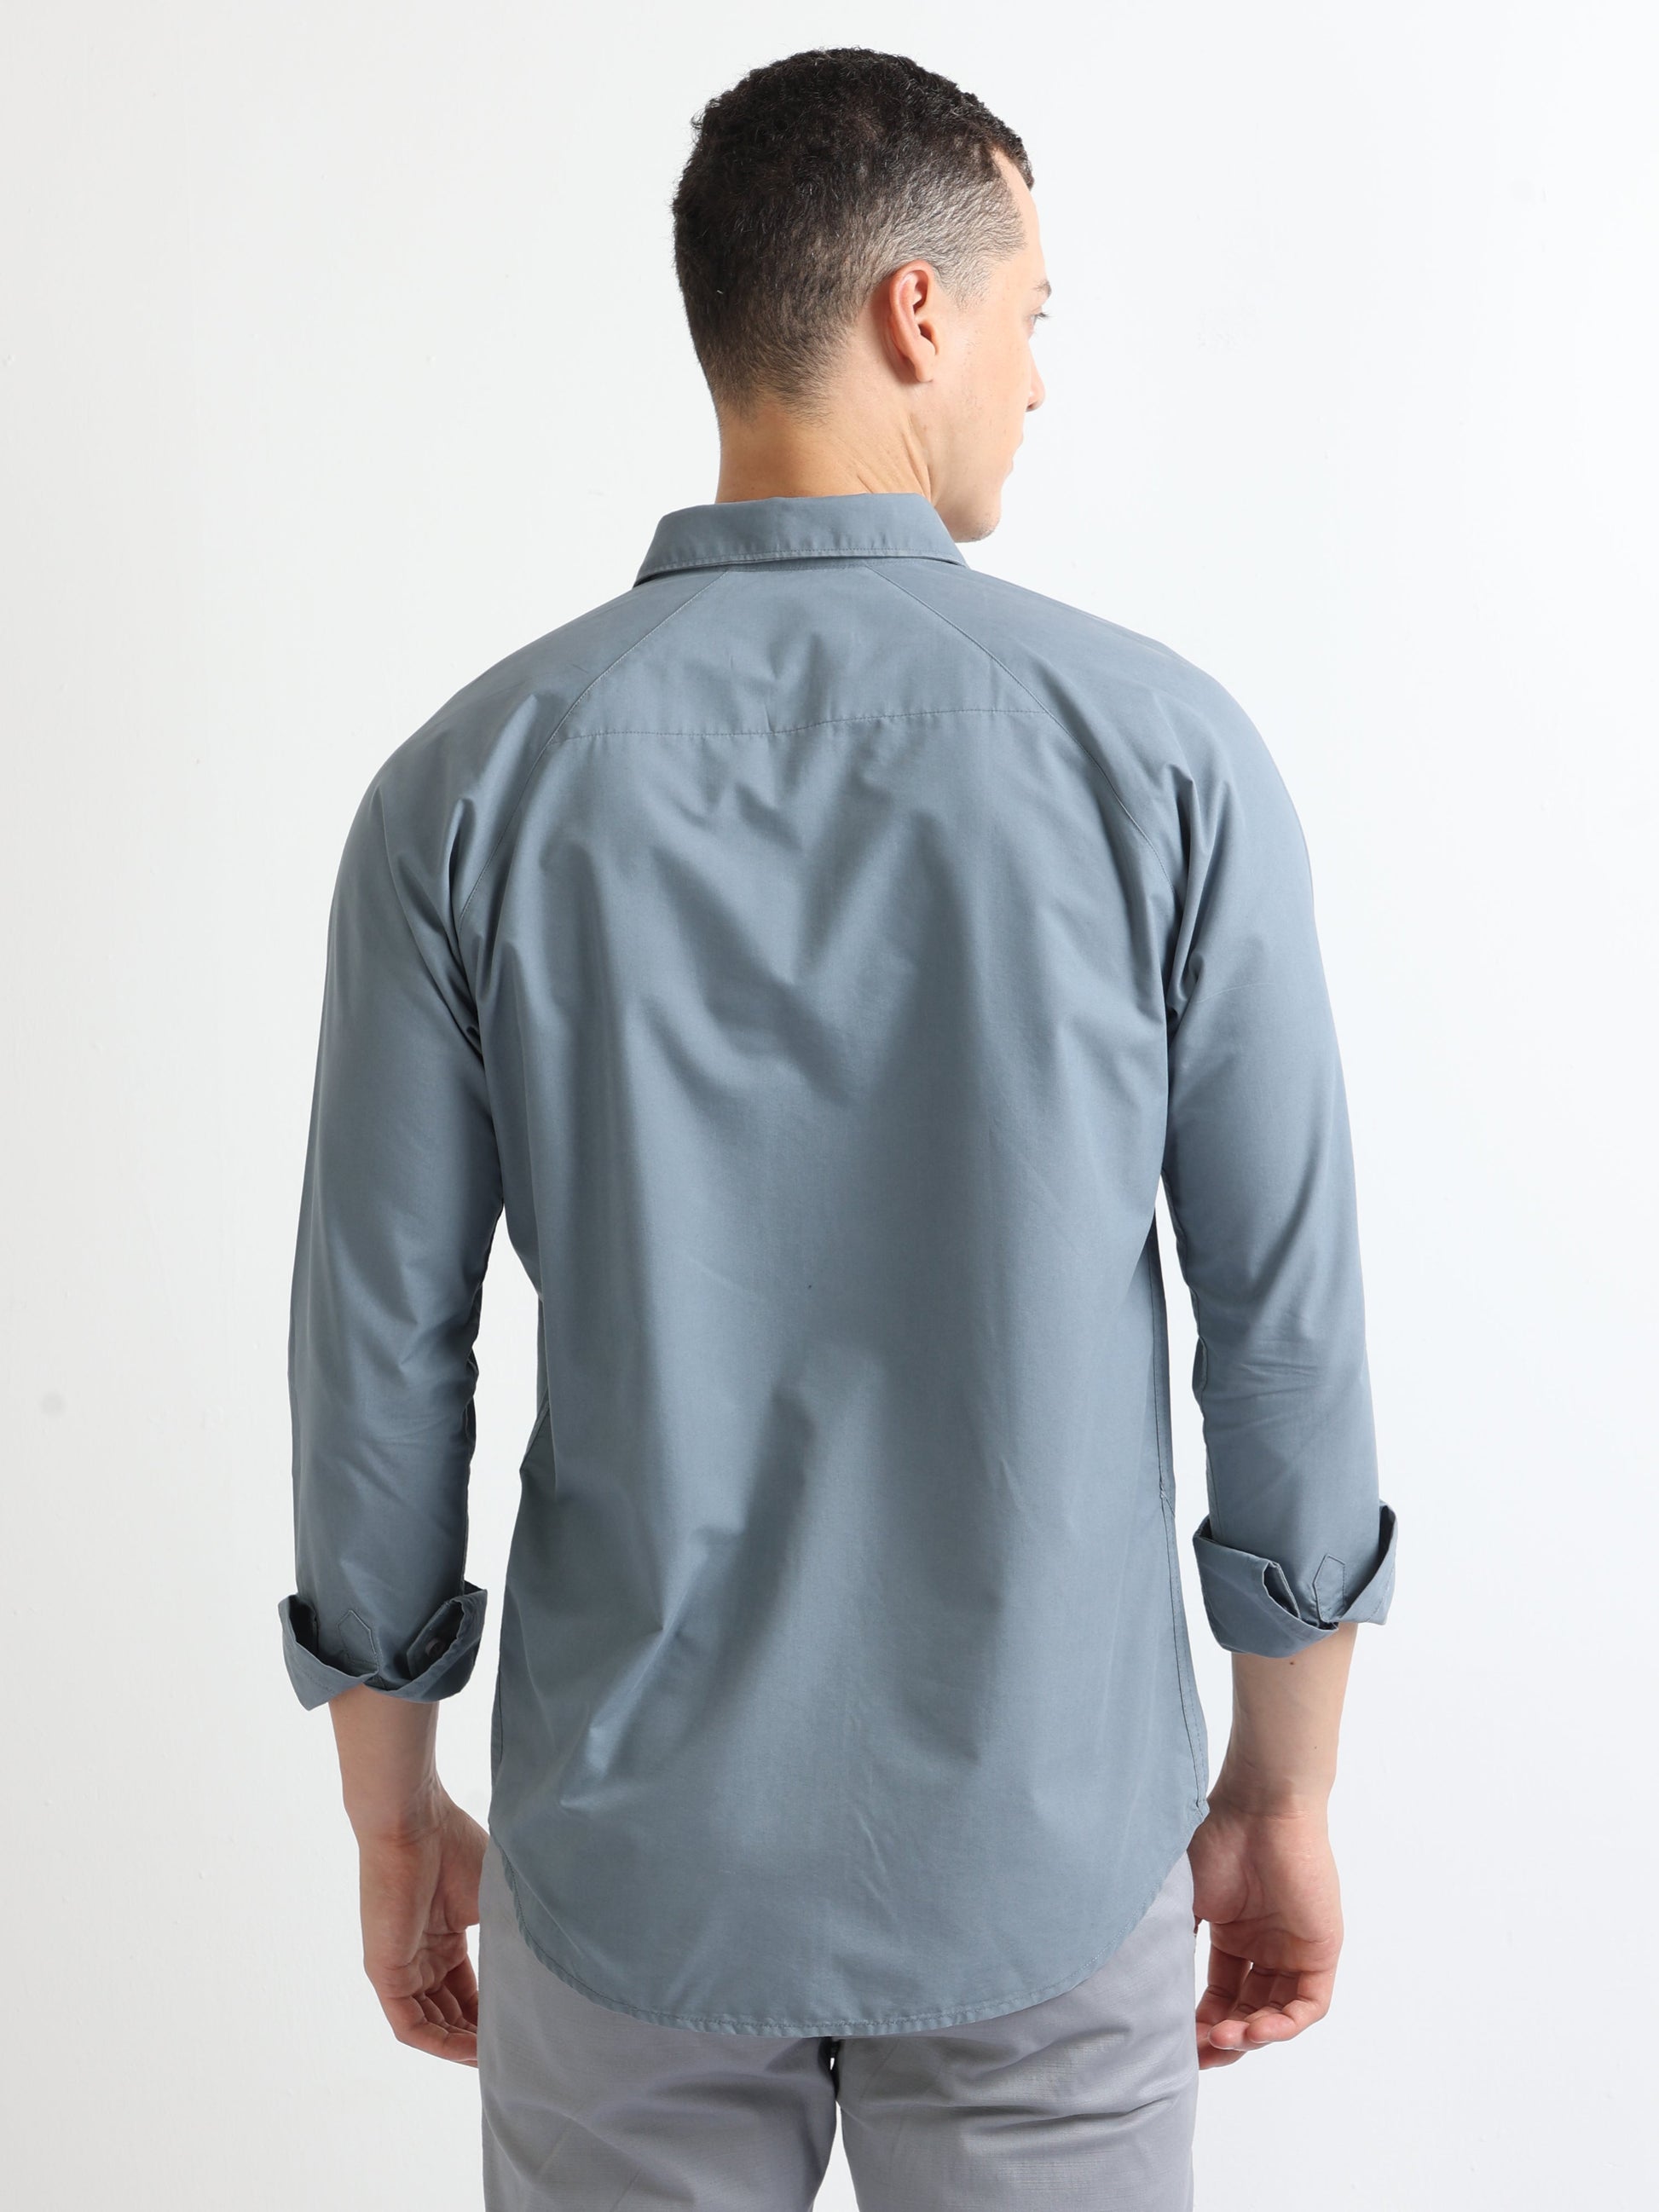 Buy Raglan Full Sleeves Shirt With Stylish Pocket Online.